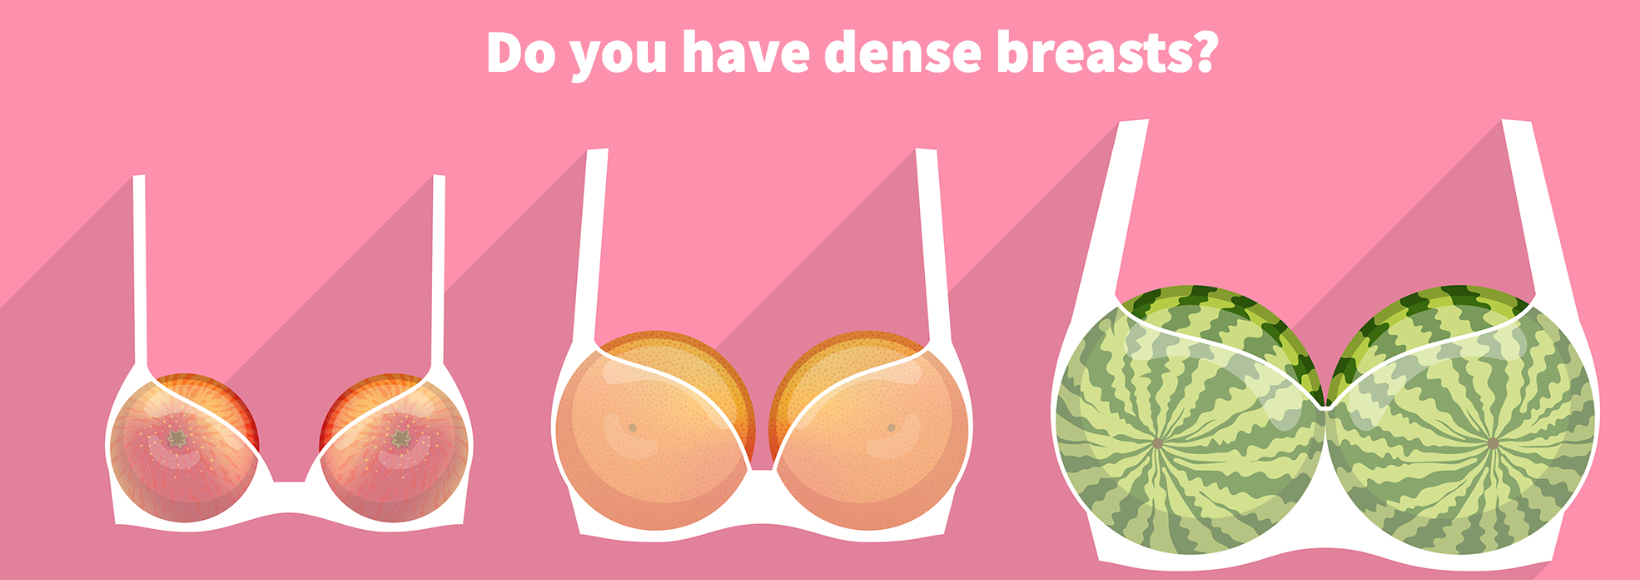 breast density hdr